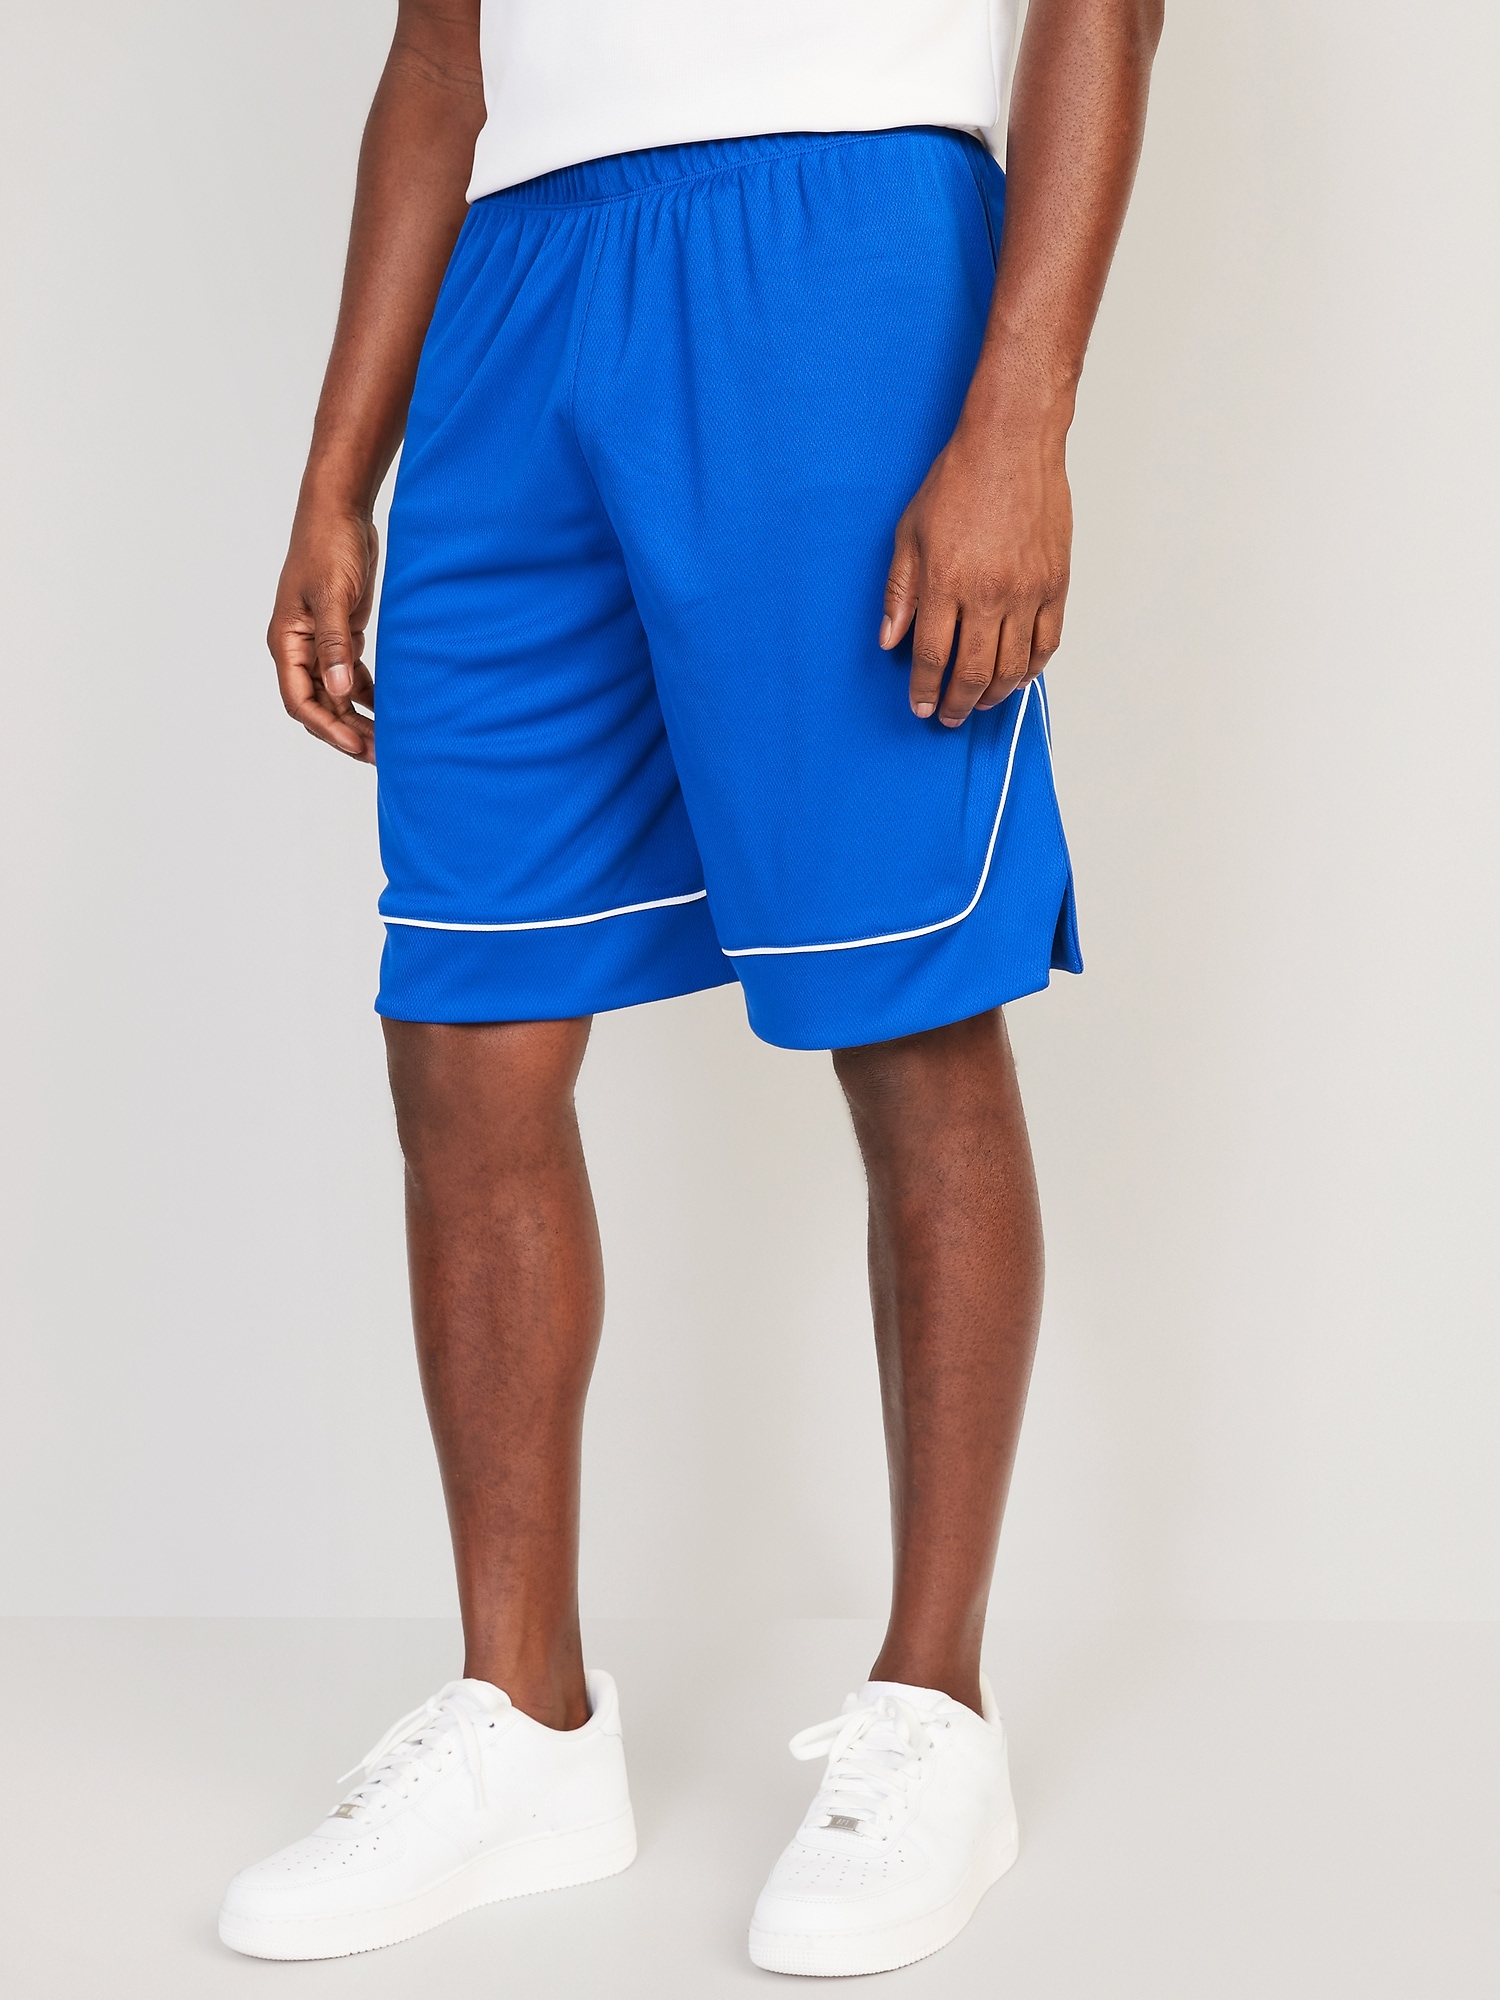 Mesh Basketball Shorts -- 10-inch inseam